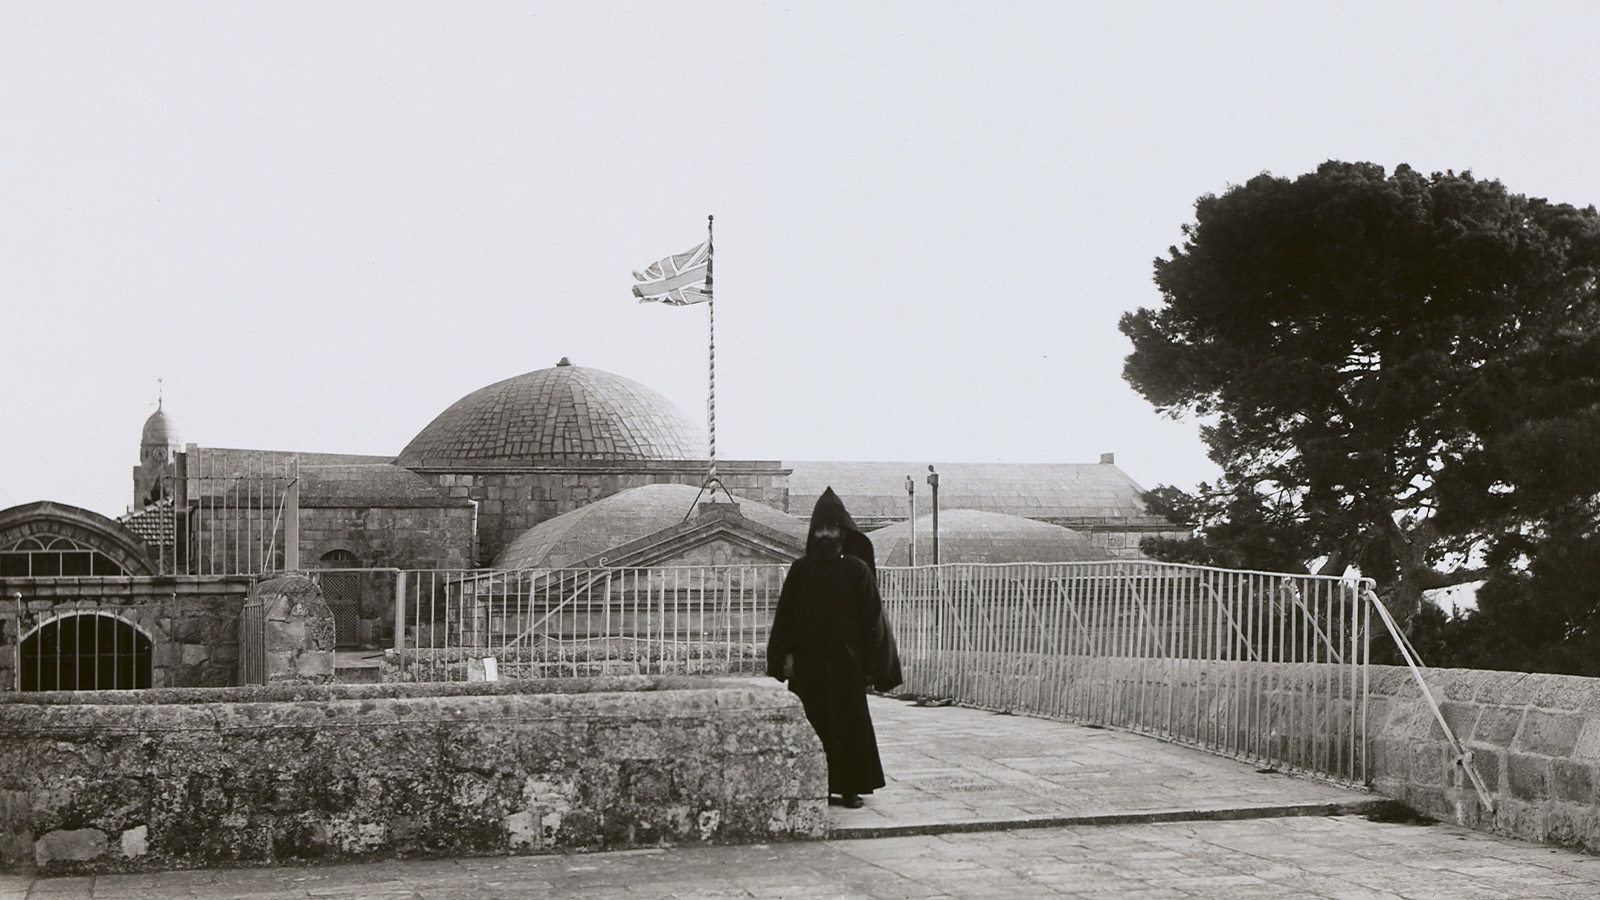 View of the Monastery of Saint James. Album of photographs of Armenian religious sites – Jerusalem and Bethlehem. Gulbenkian Archives I04-011.